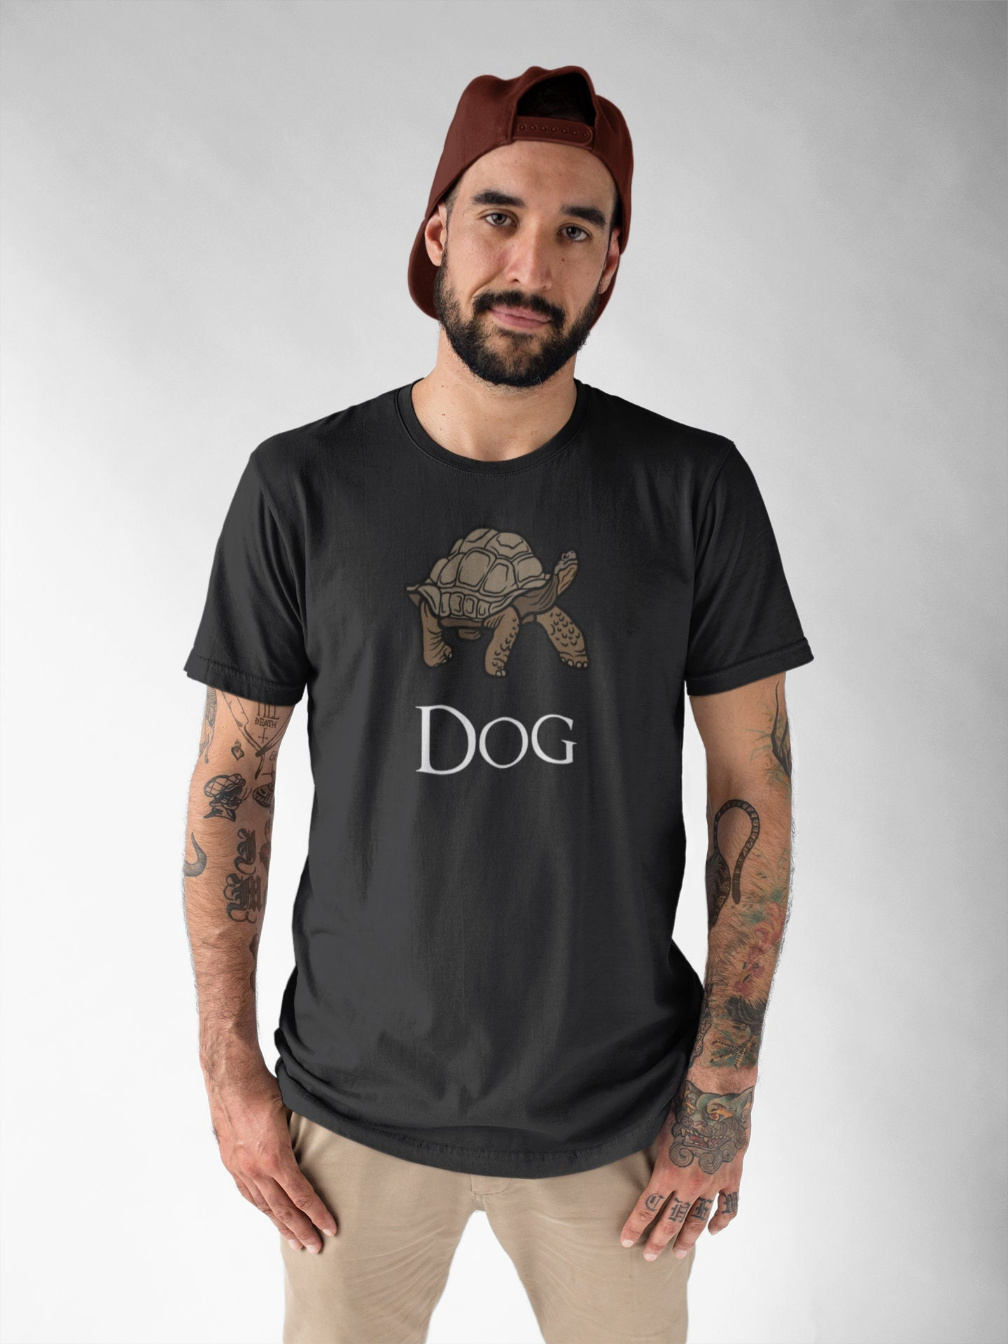 Elden Ring Dog Turtle Shirt